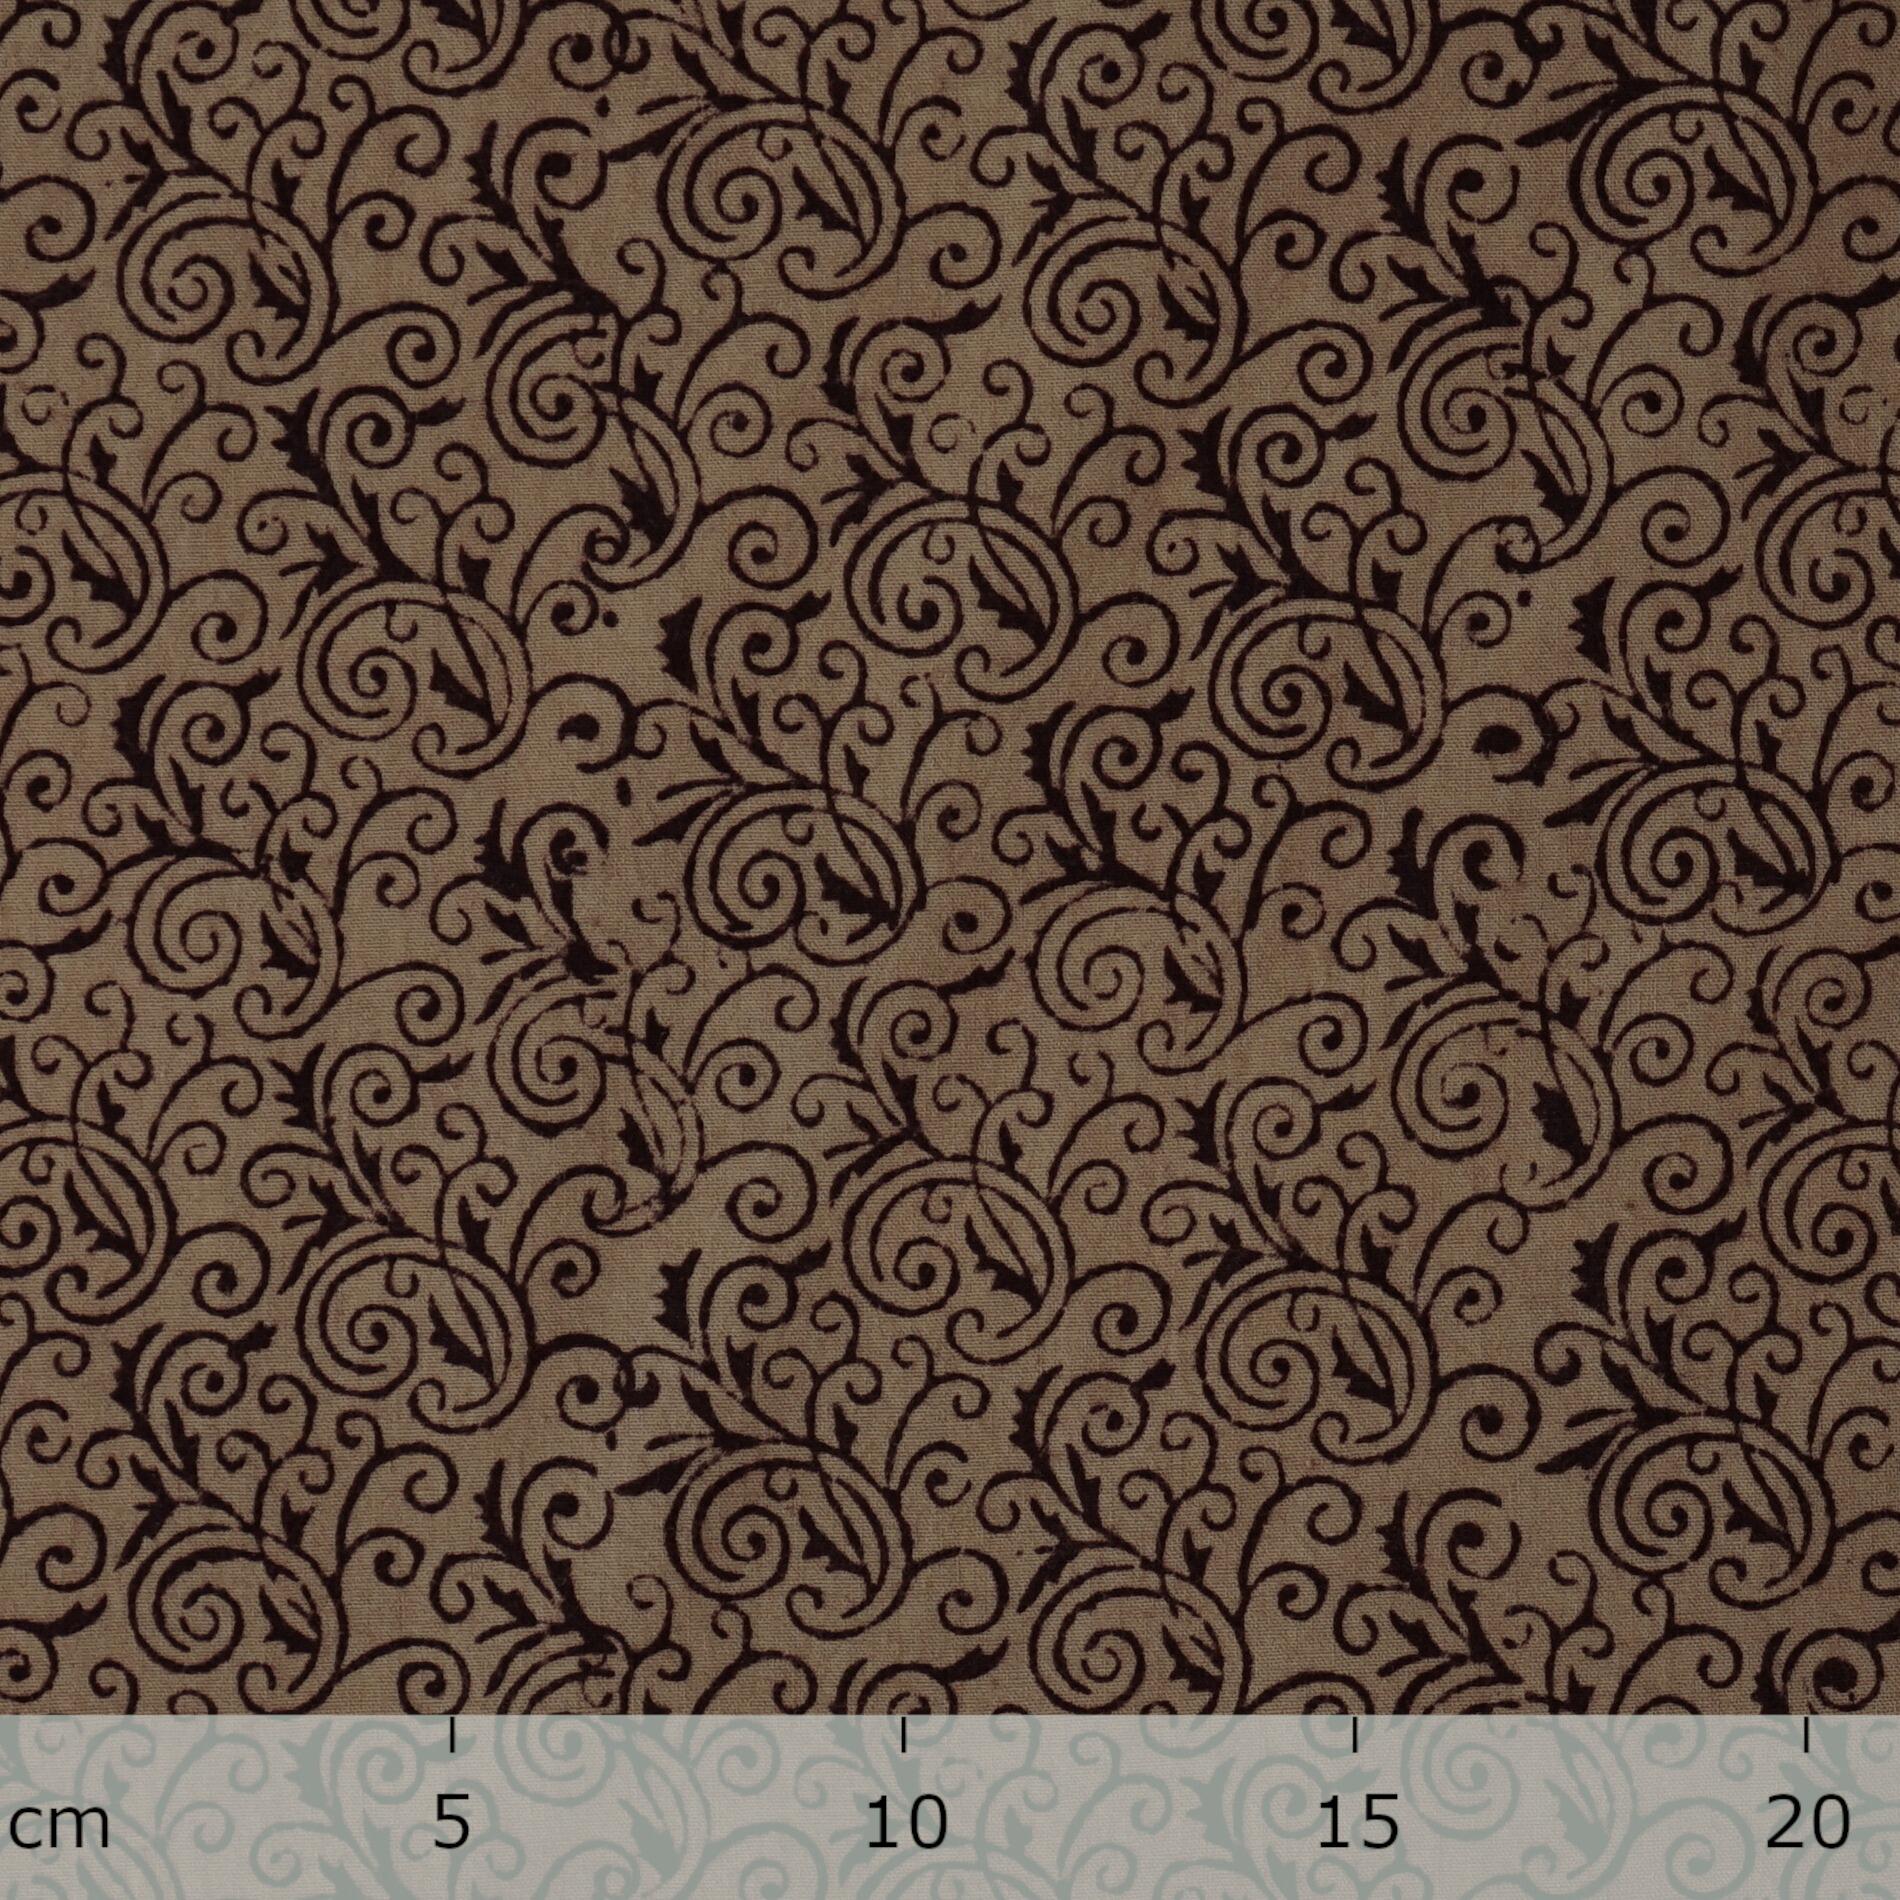 100% Block-Printed Cotton Fabric From India- Bagh - Iron Rust Black & Indigosol Khaki - Quetico Print - Ruler